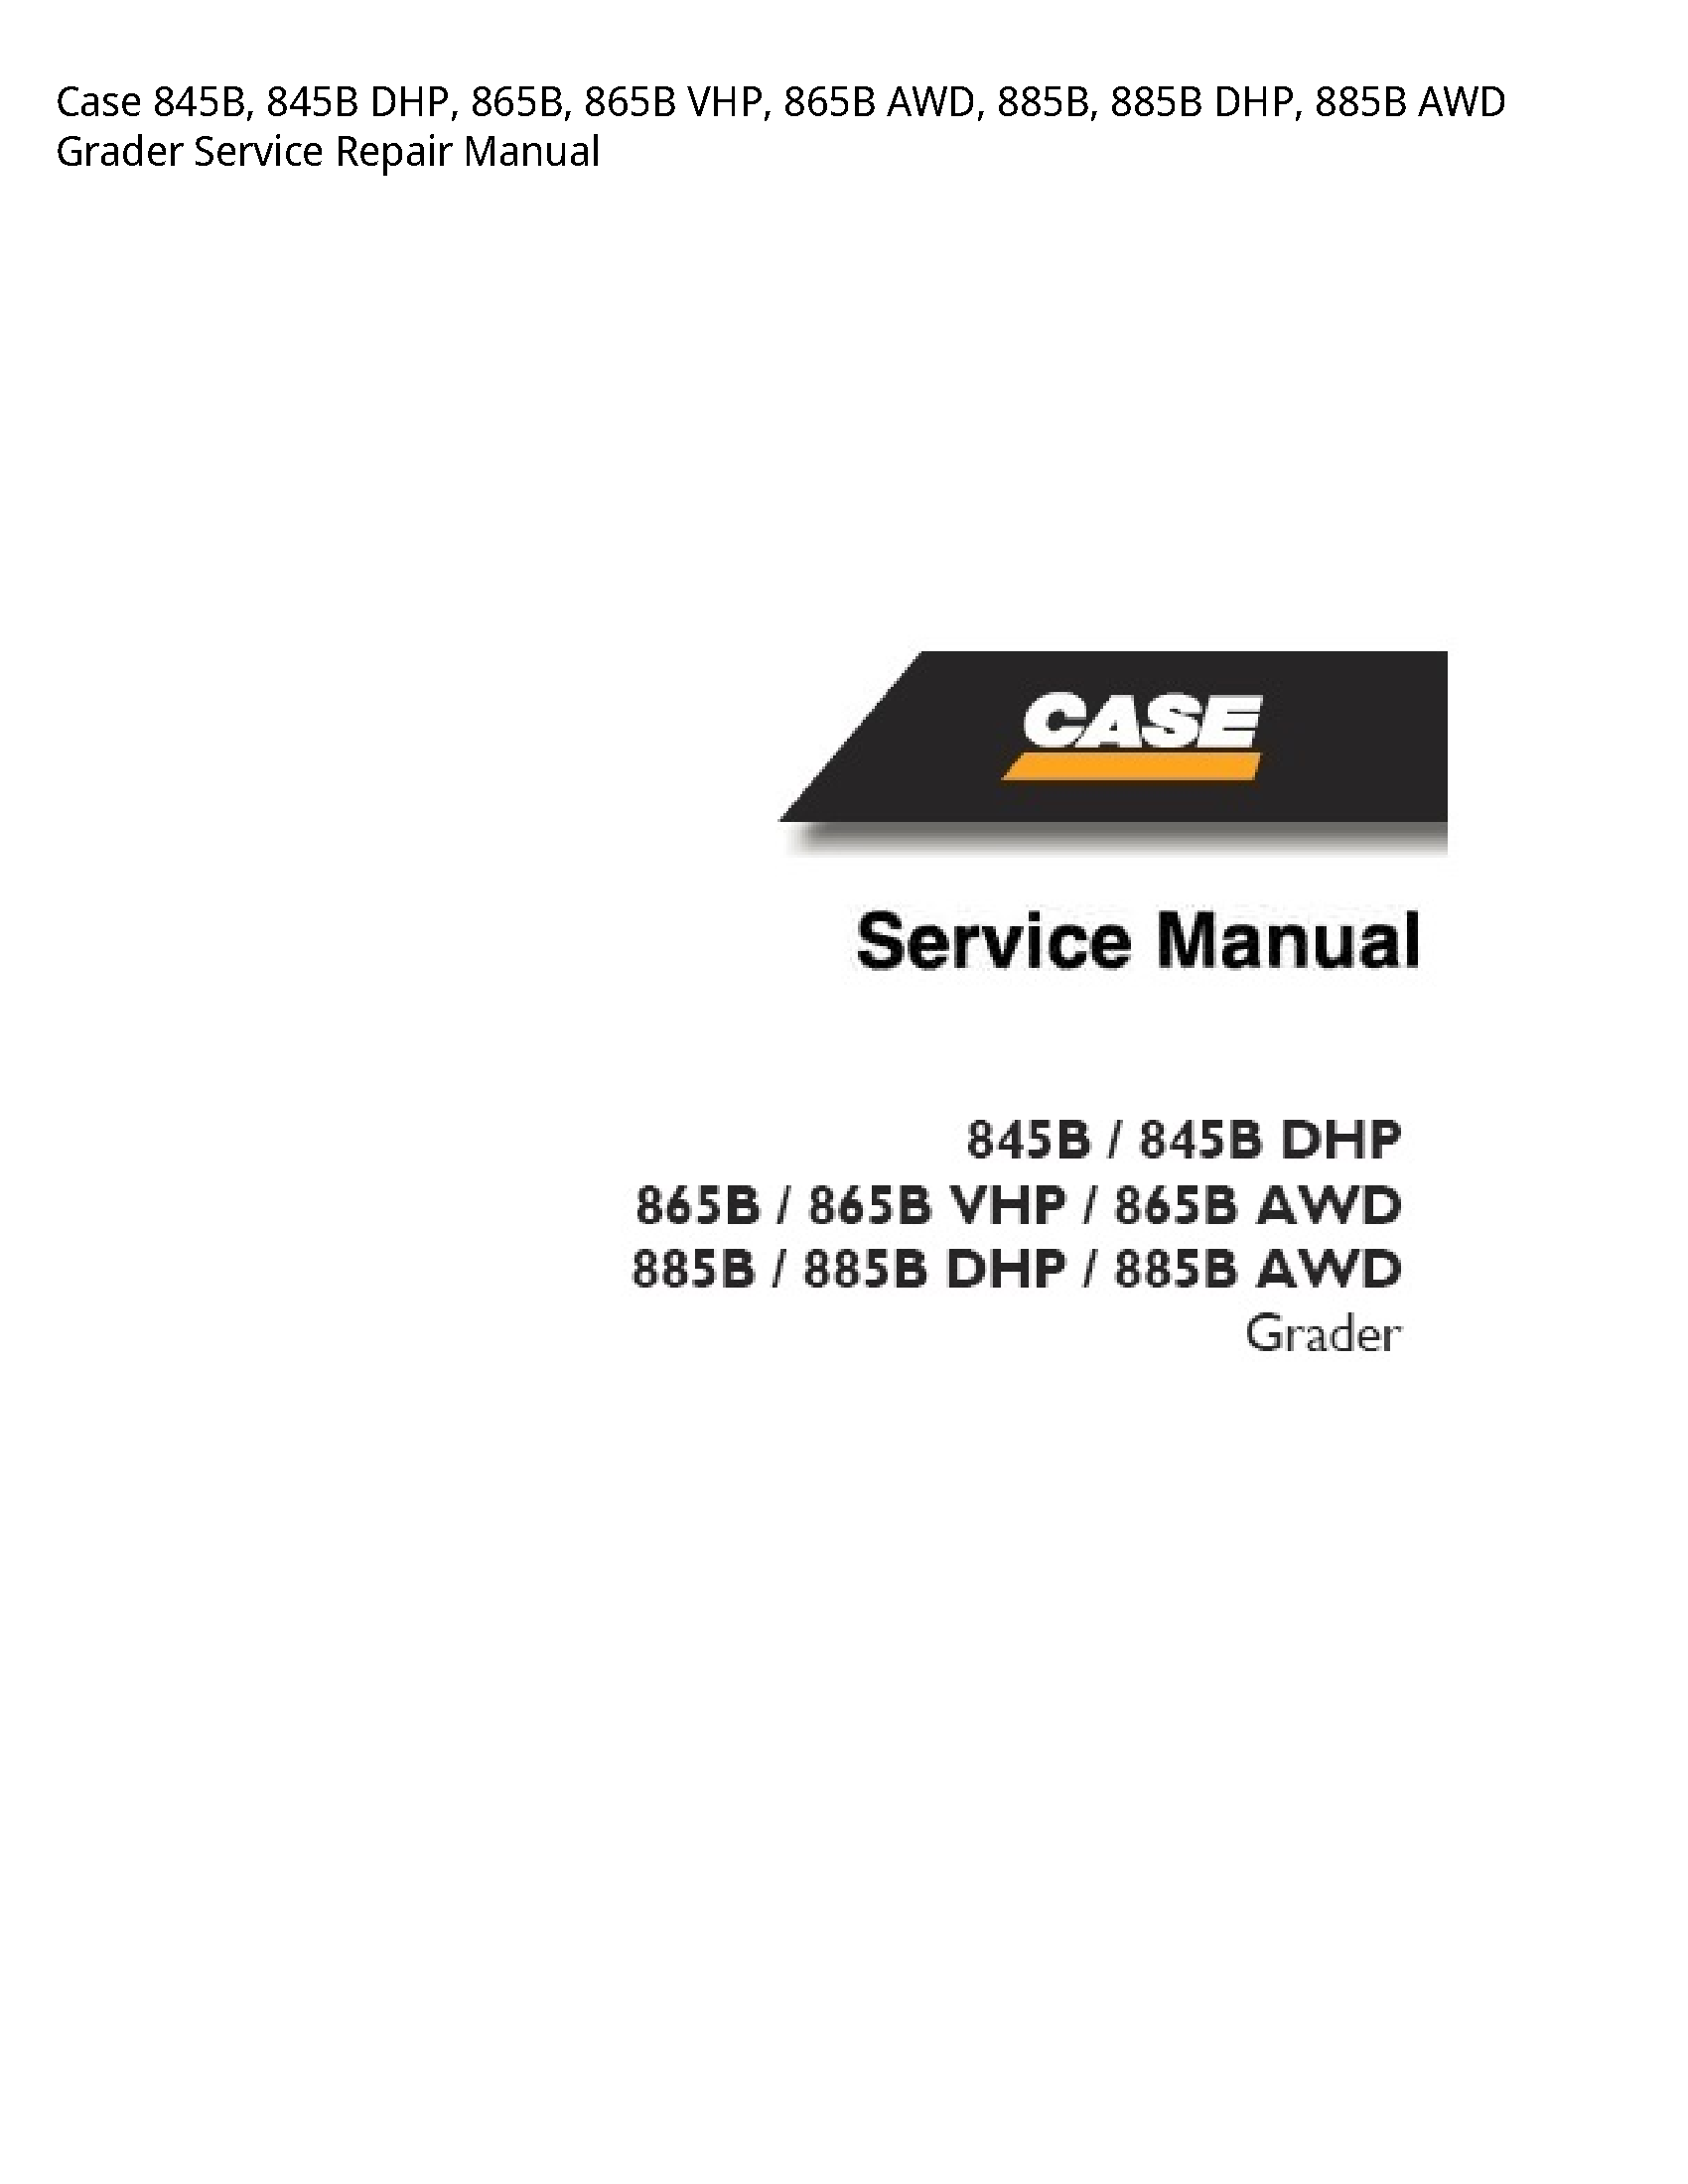 Case/Case IH 845B DHP manual